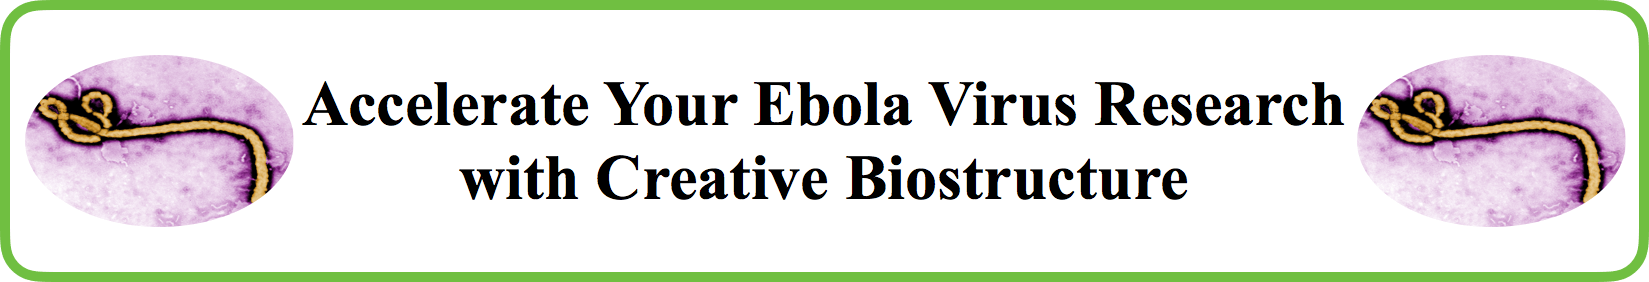 Discovery Program for Ebola Virus Targets